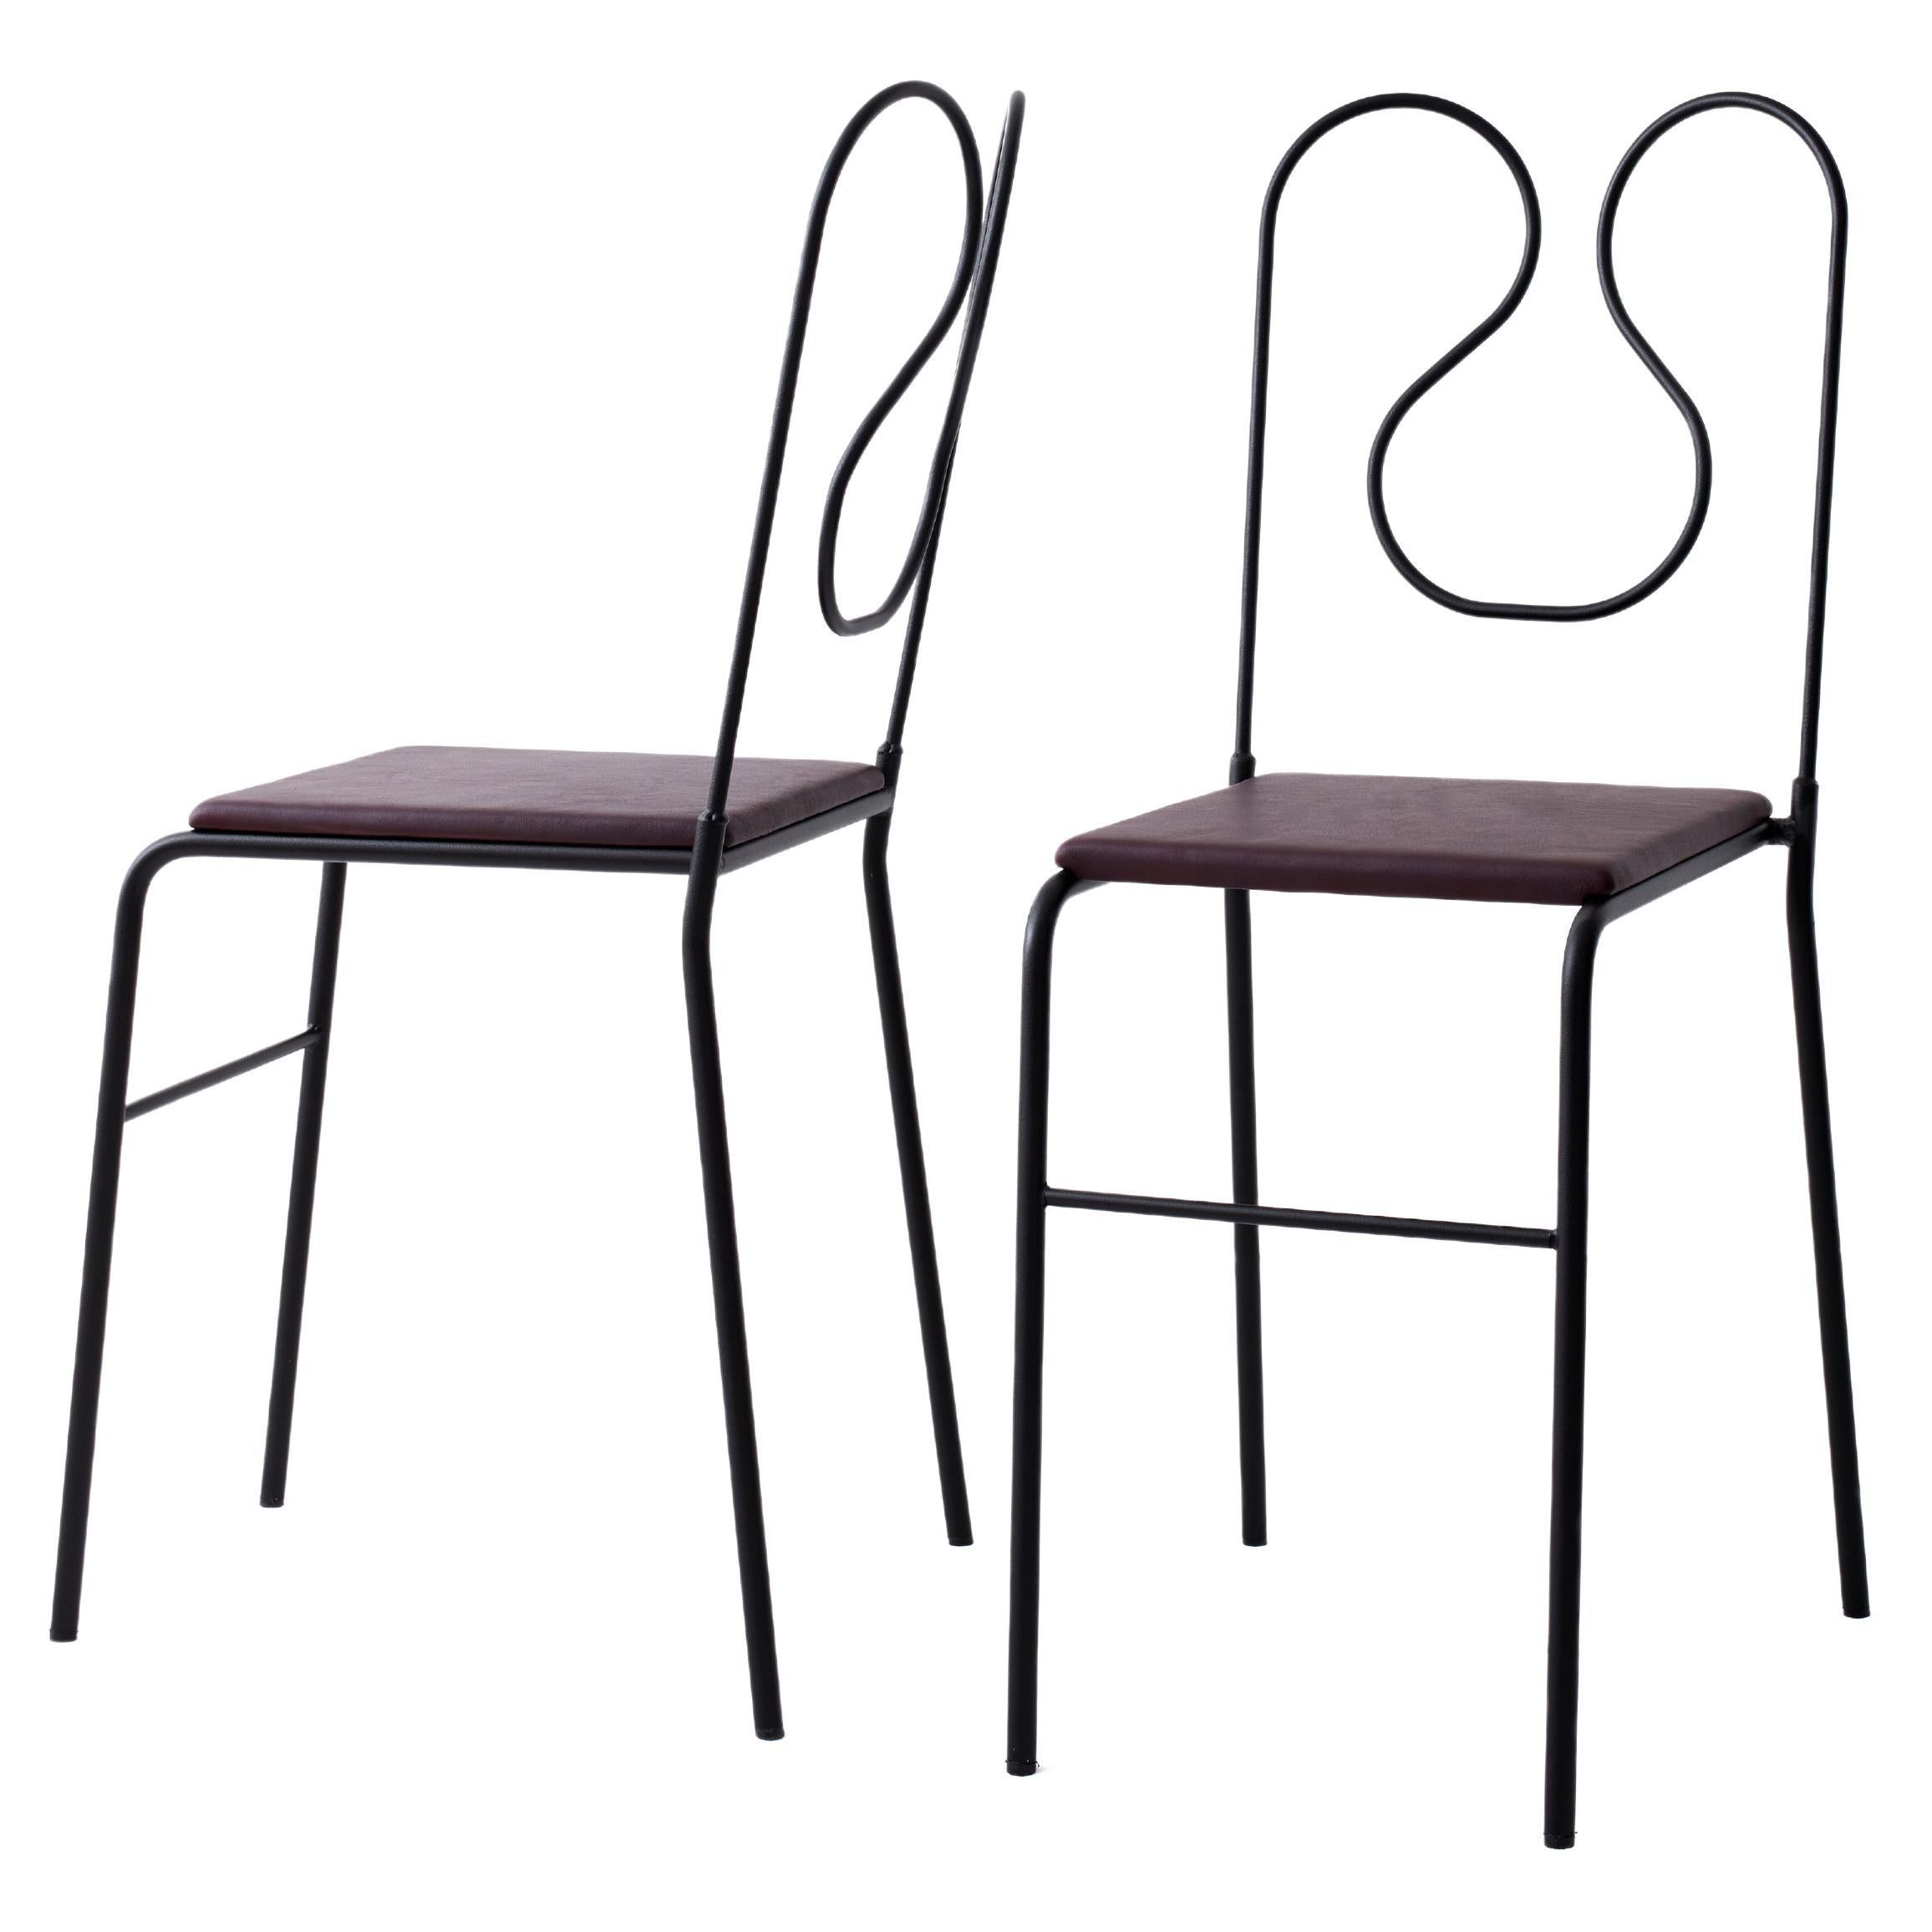 Chair Liv by Swedish designer Jonas Bohlin, made in Sweden